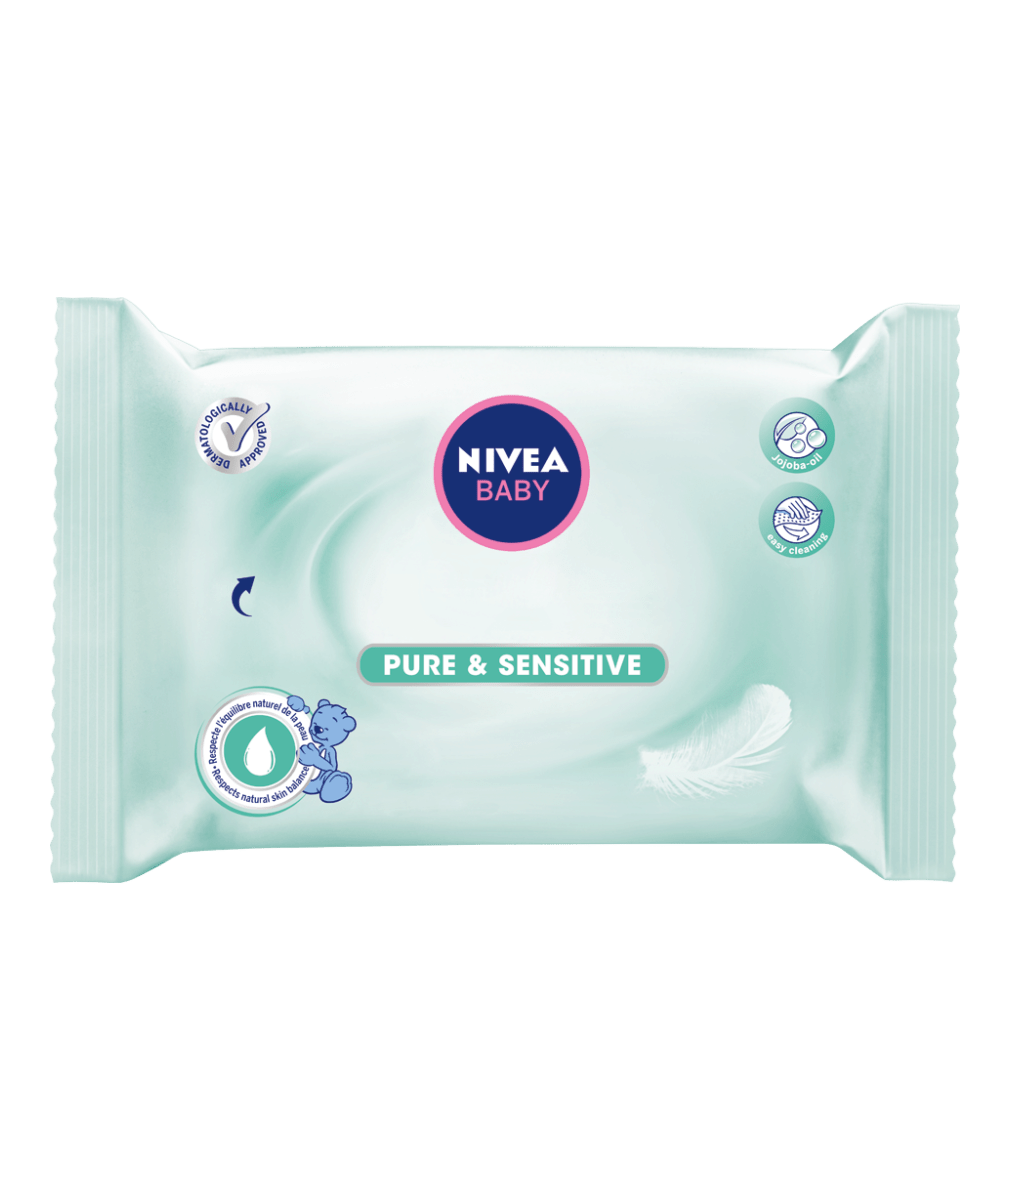 NIVEA BABY Lingettes Pure & Sensitive Refill 63ST